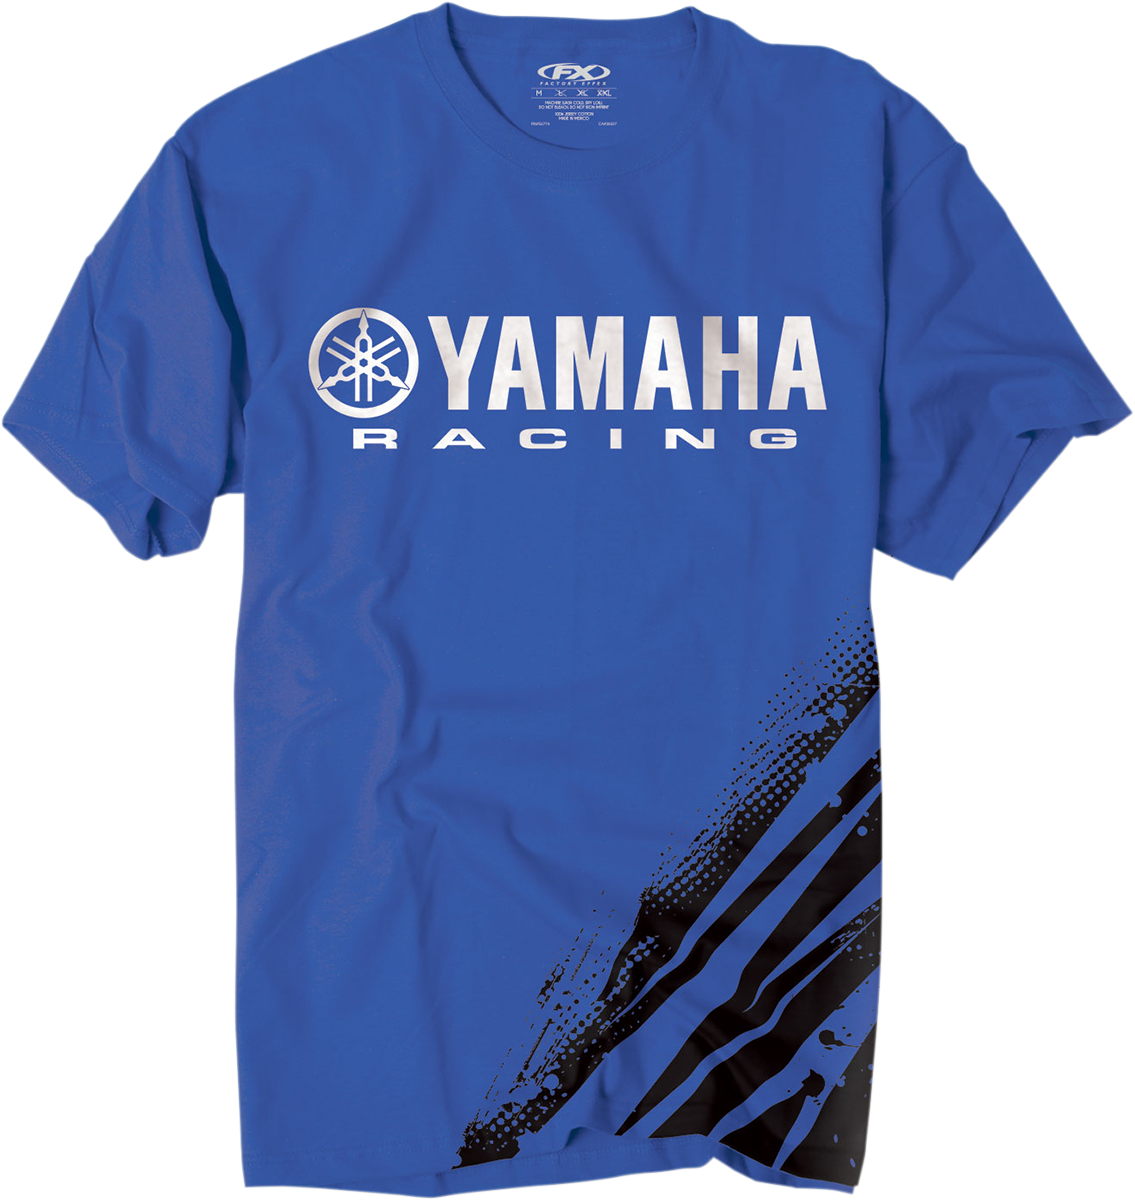 FACTORY EFFEX Yamaha Racing Flare T-Shirt - Blue - Large 14-88182